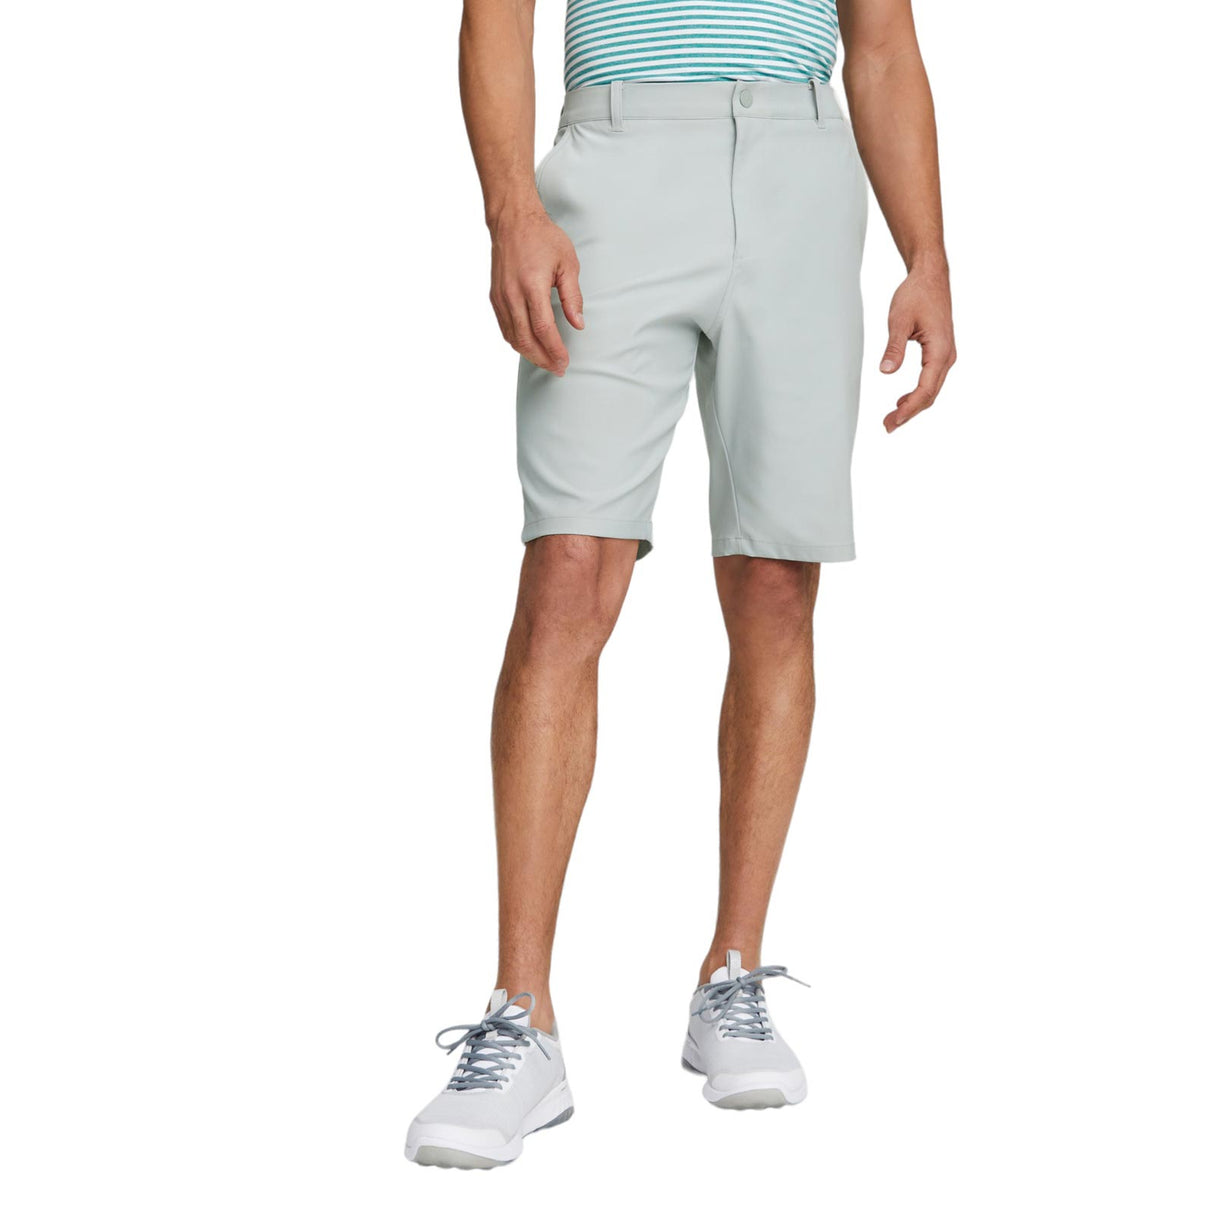 Puma Dealer 10 Golf Shorts